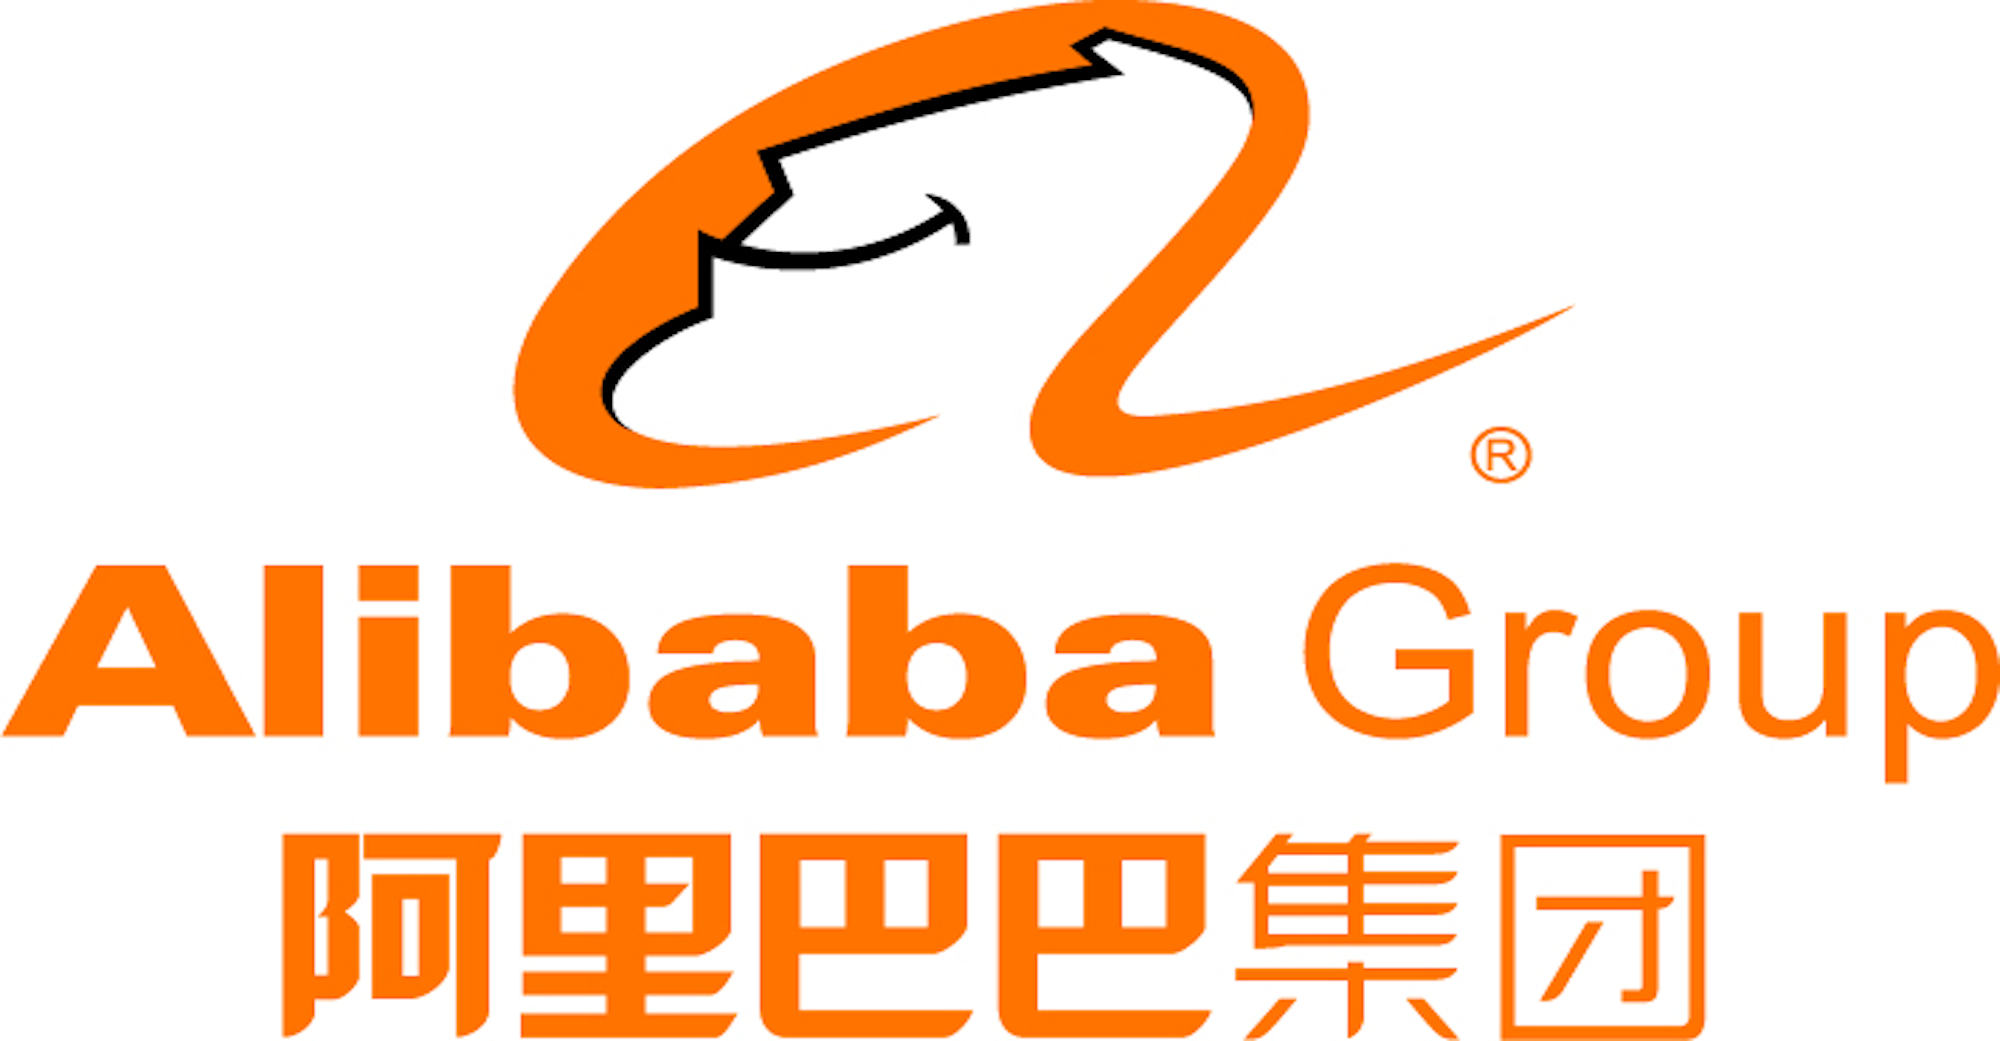 China’s Alibaba unveils AI image generator to take on Midjourney, DALL-E